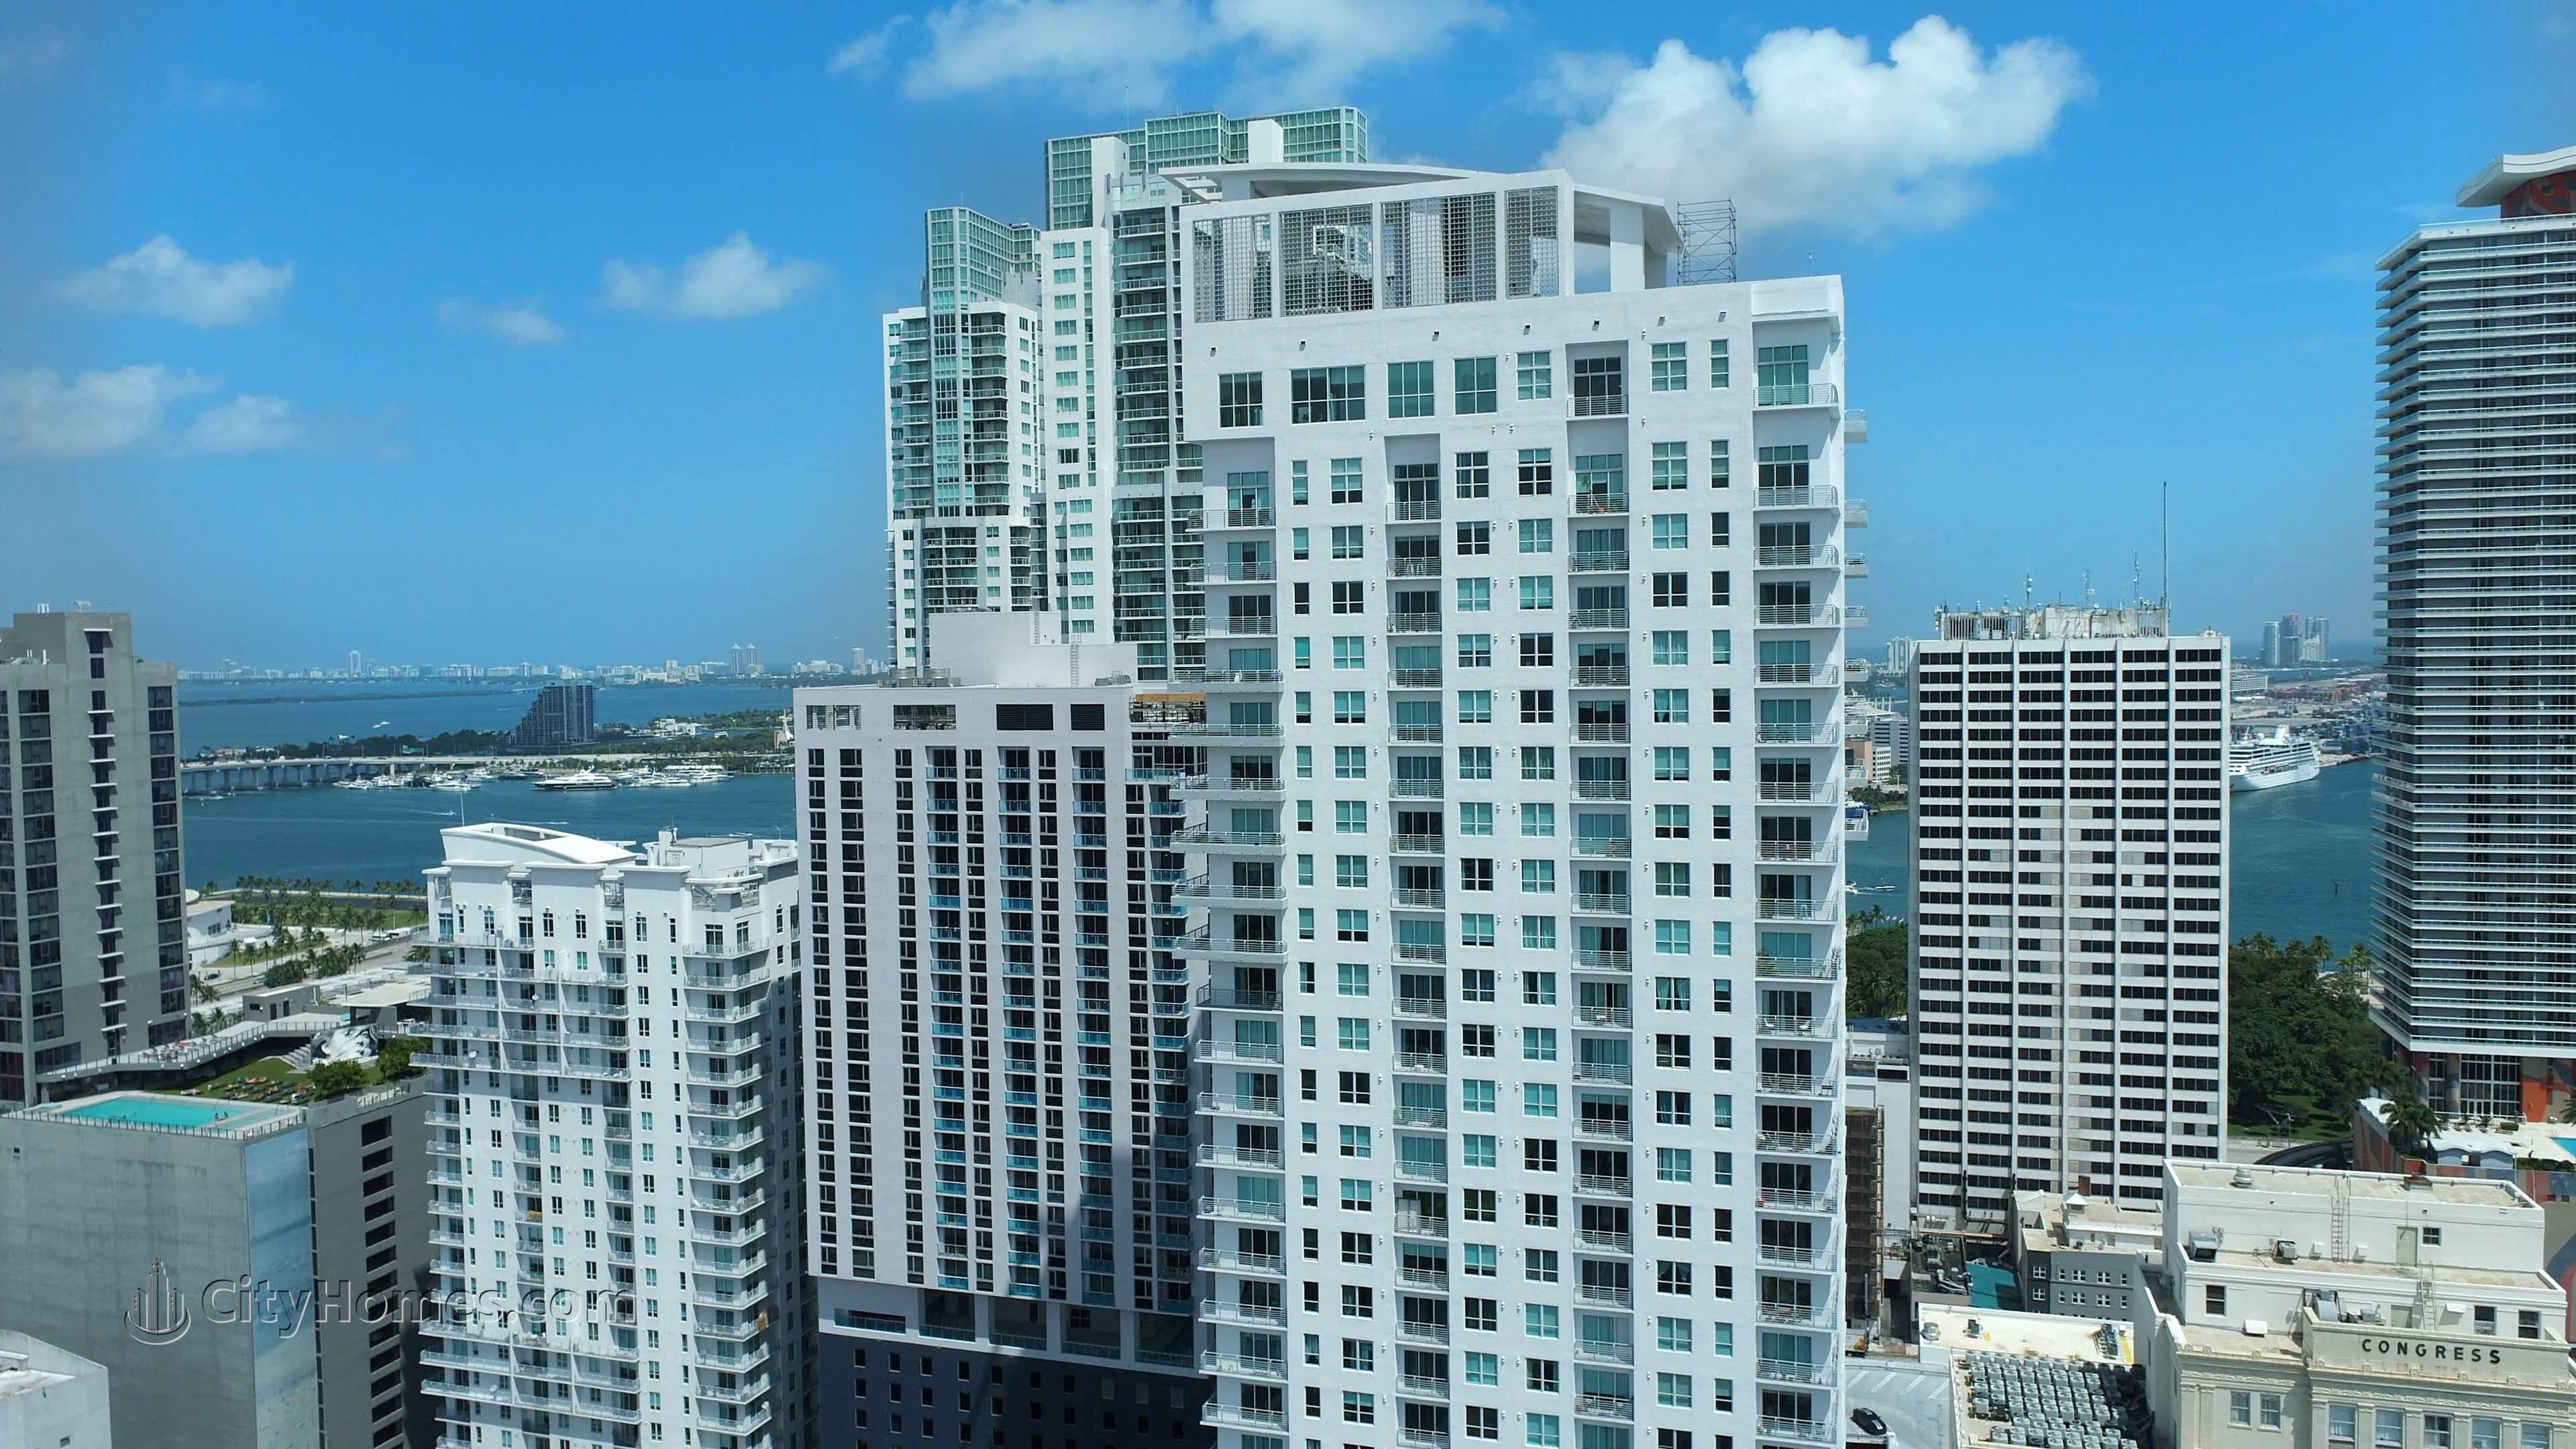 3. Loft Downtown II building at 133 2nd Avenue, Miami, FL 33132